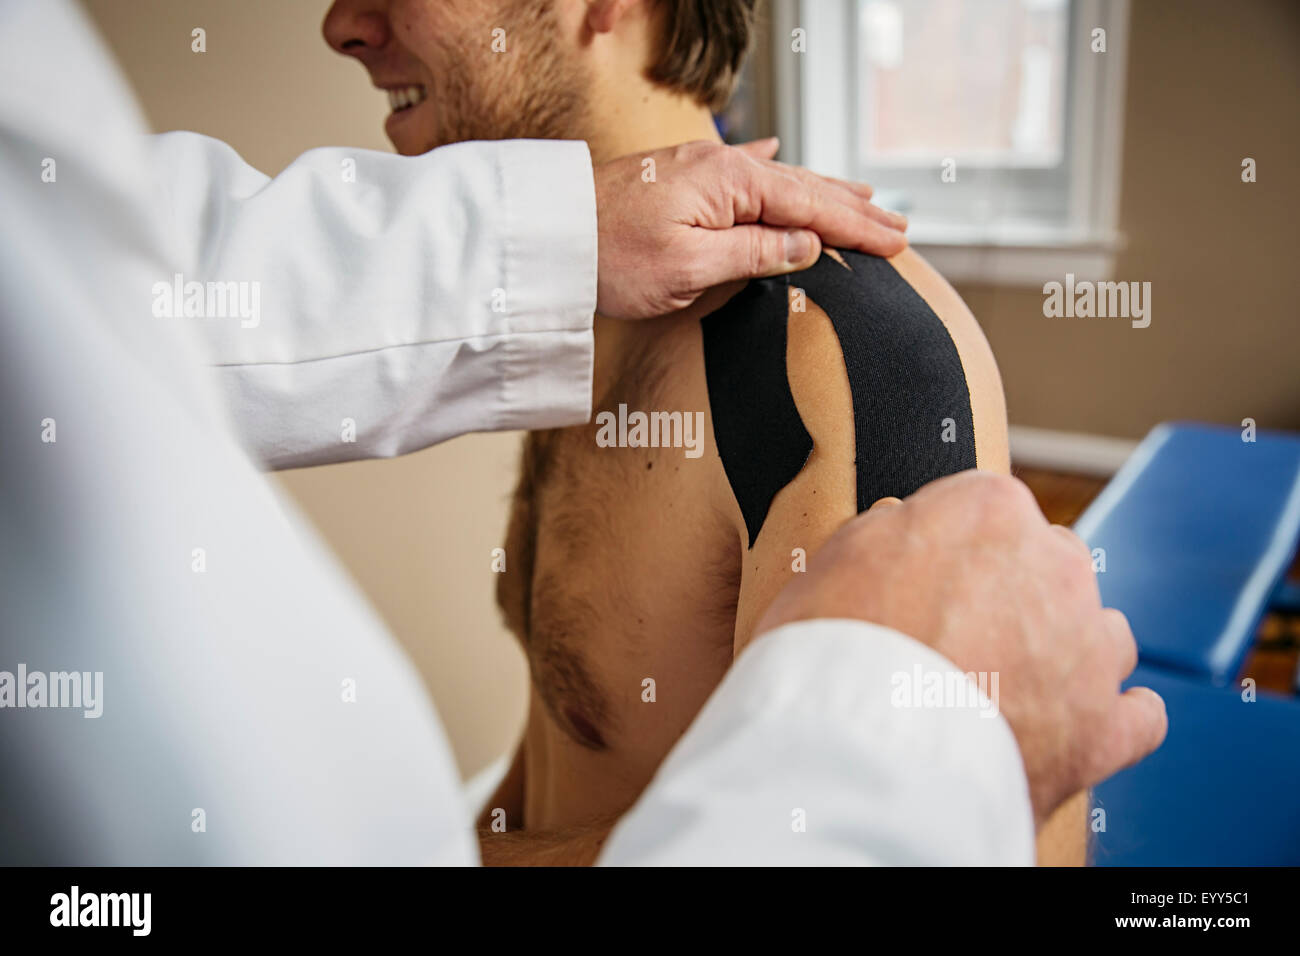 Caucasian doctor applying tape to shoulder of patient Stock Photo